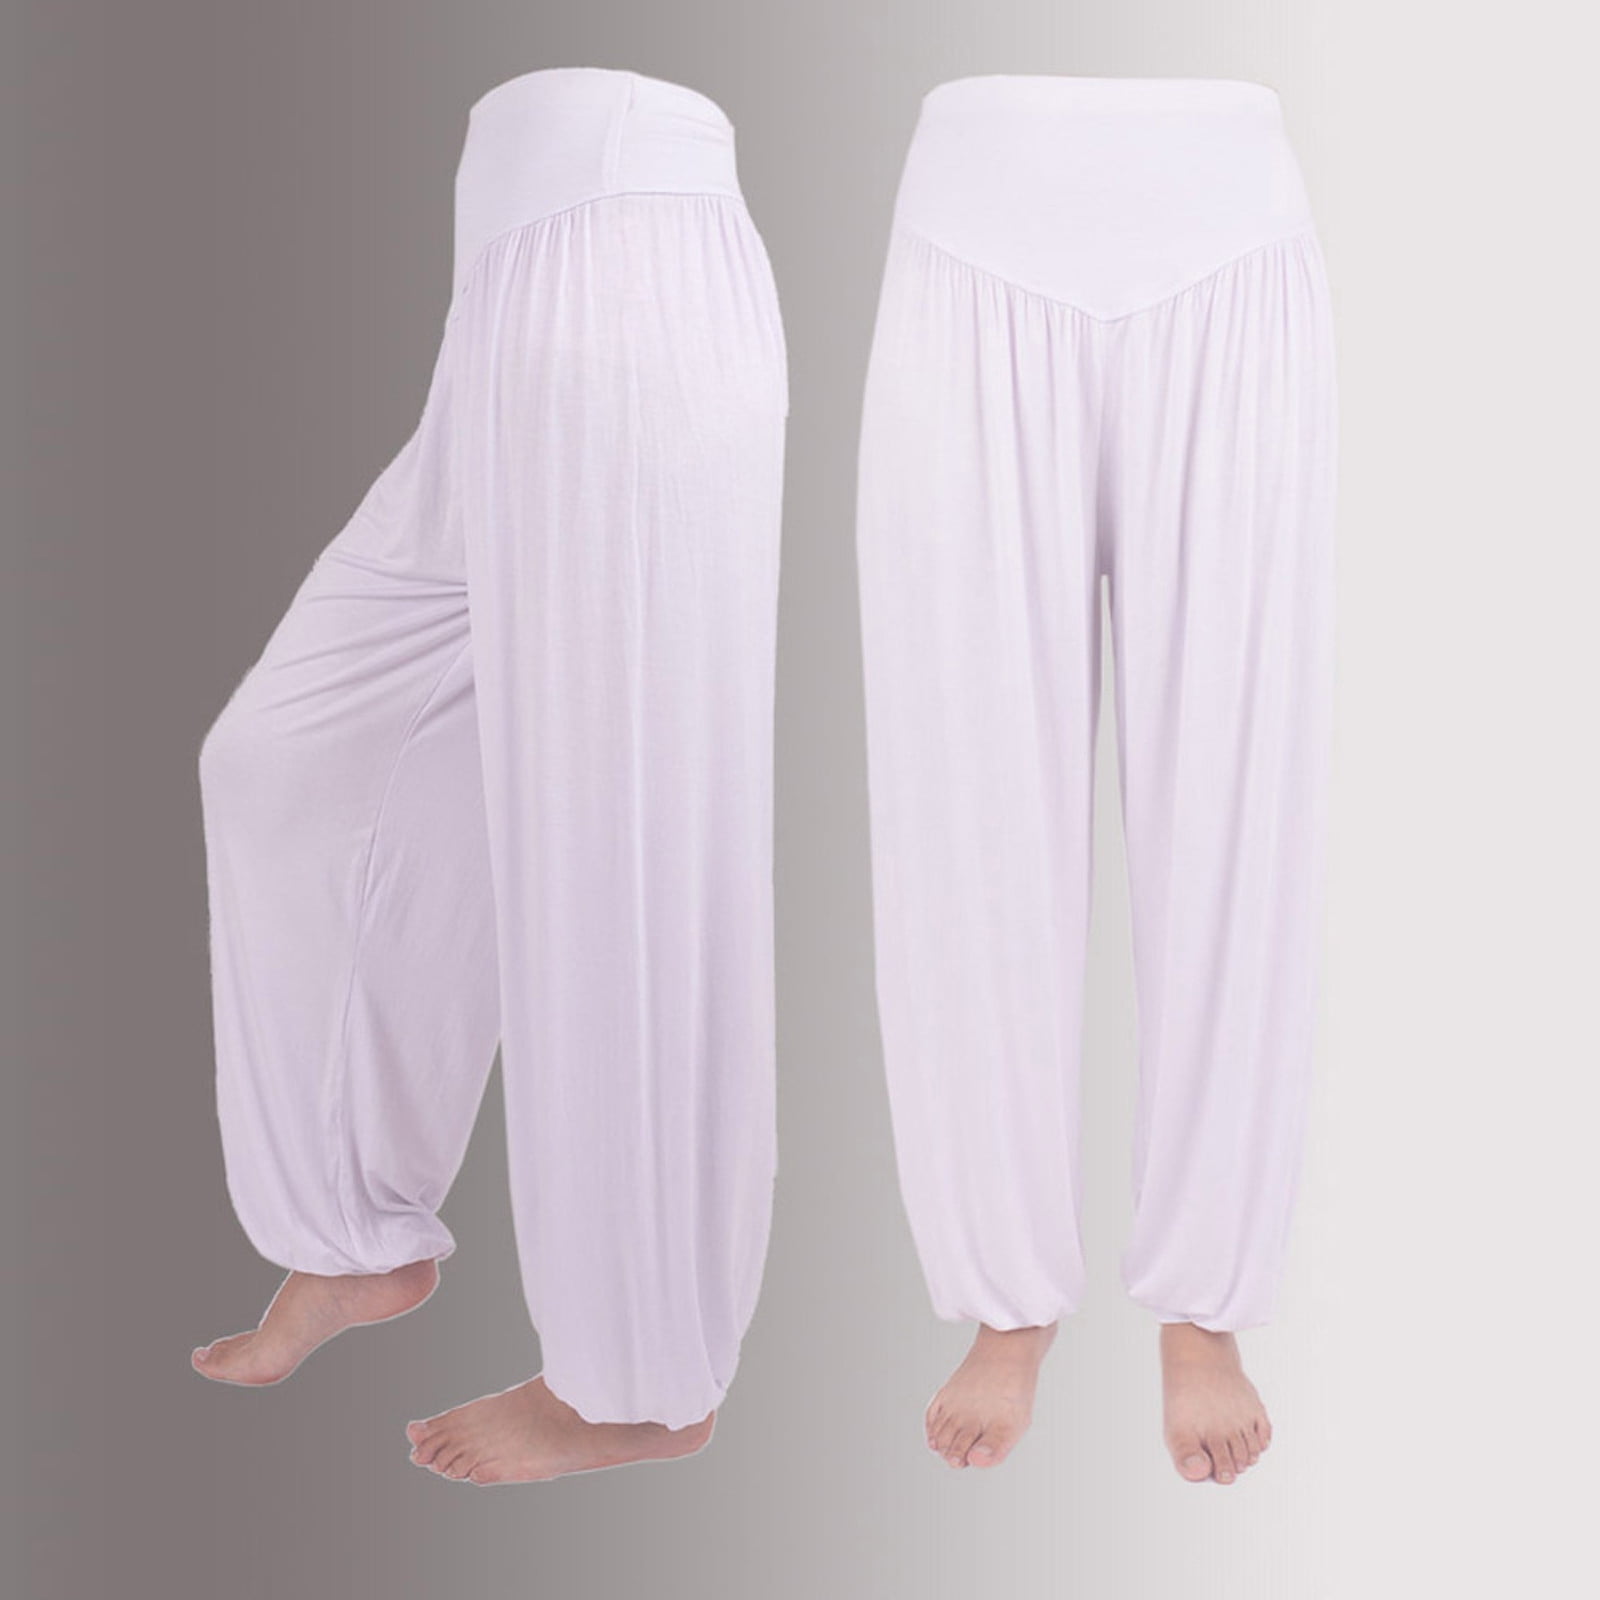 50% Off Clearance Lenago Womens Elastic Loose Casual Cotton Soft Yoga ...